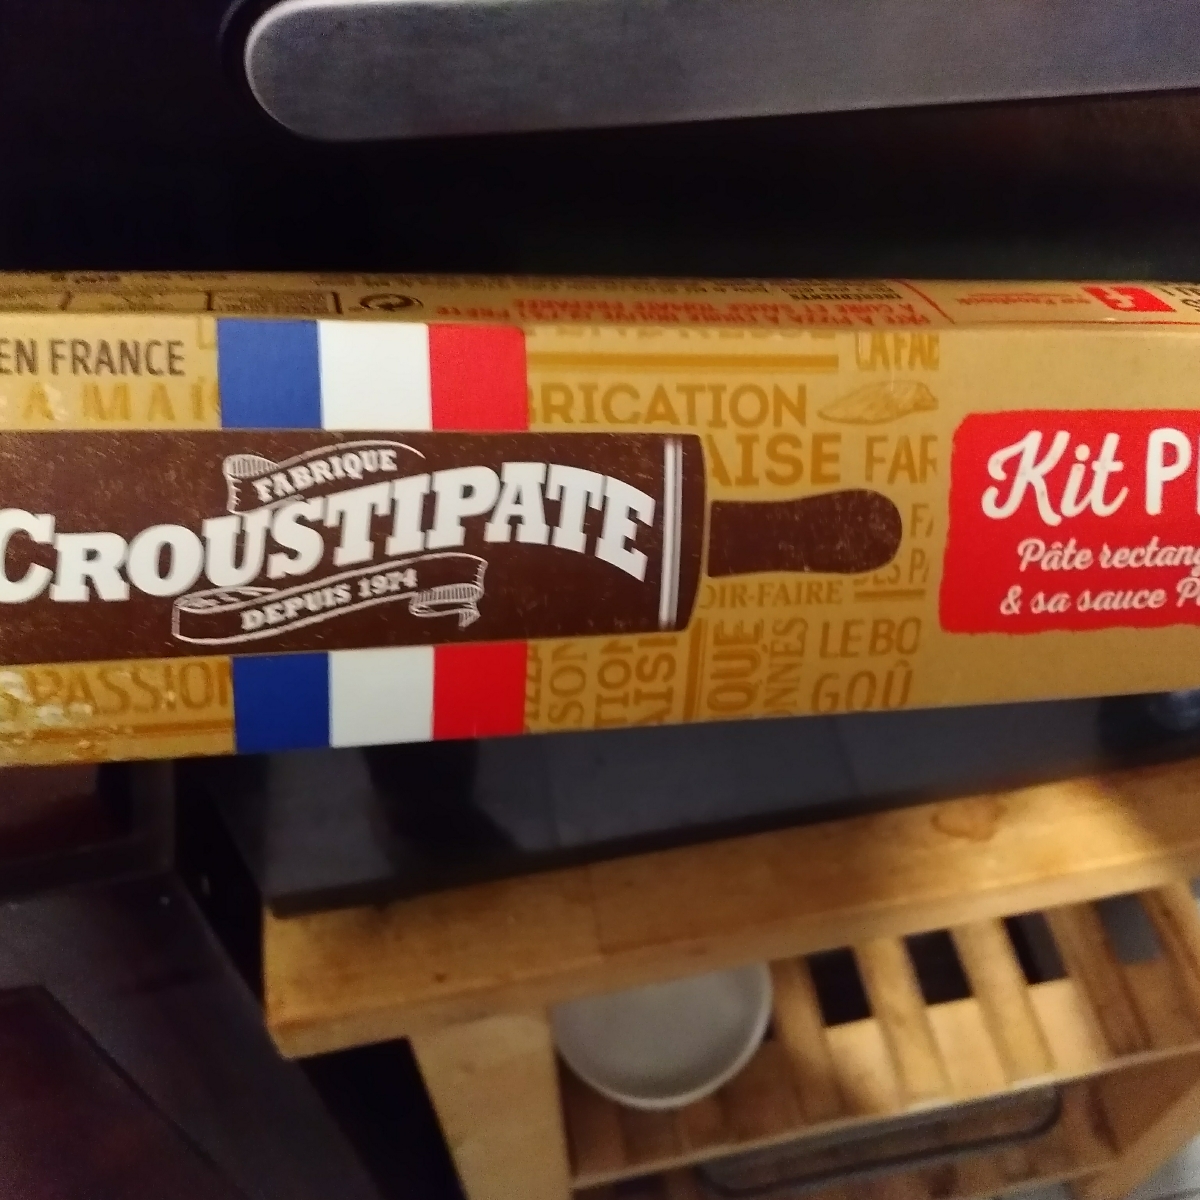 Kit pizza - Croustipate